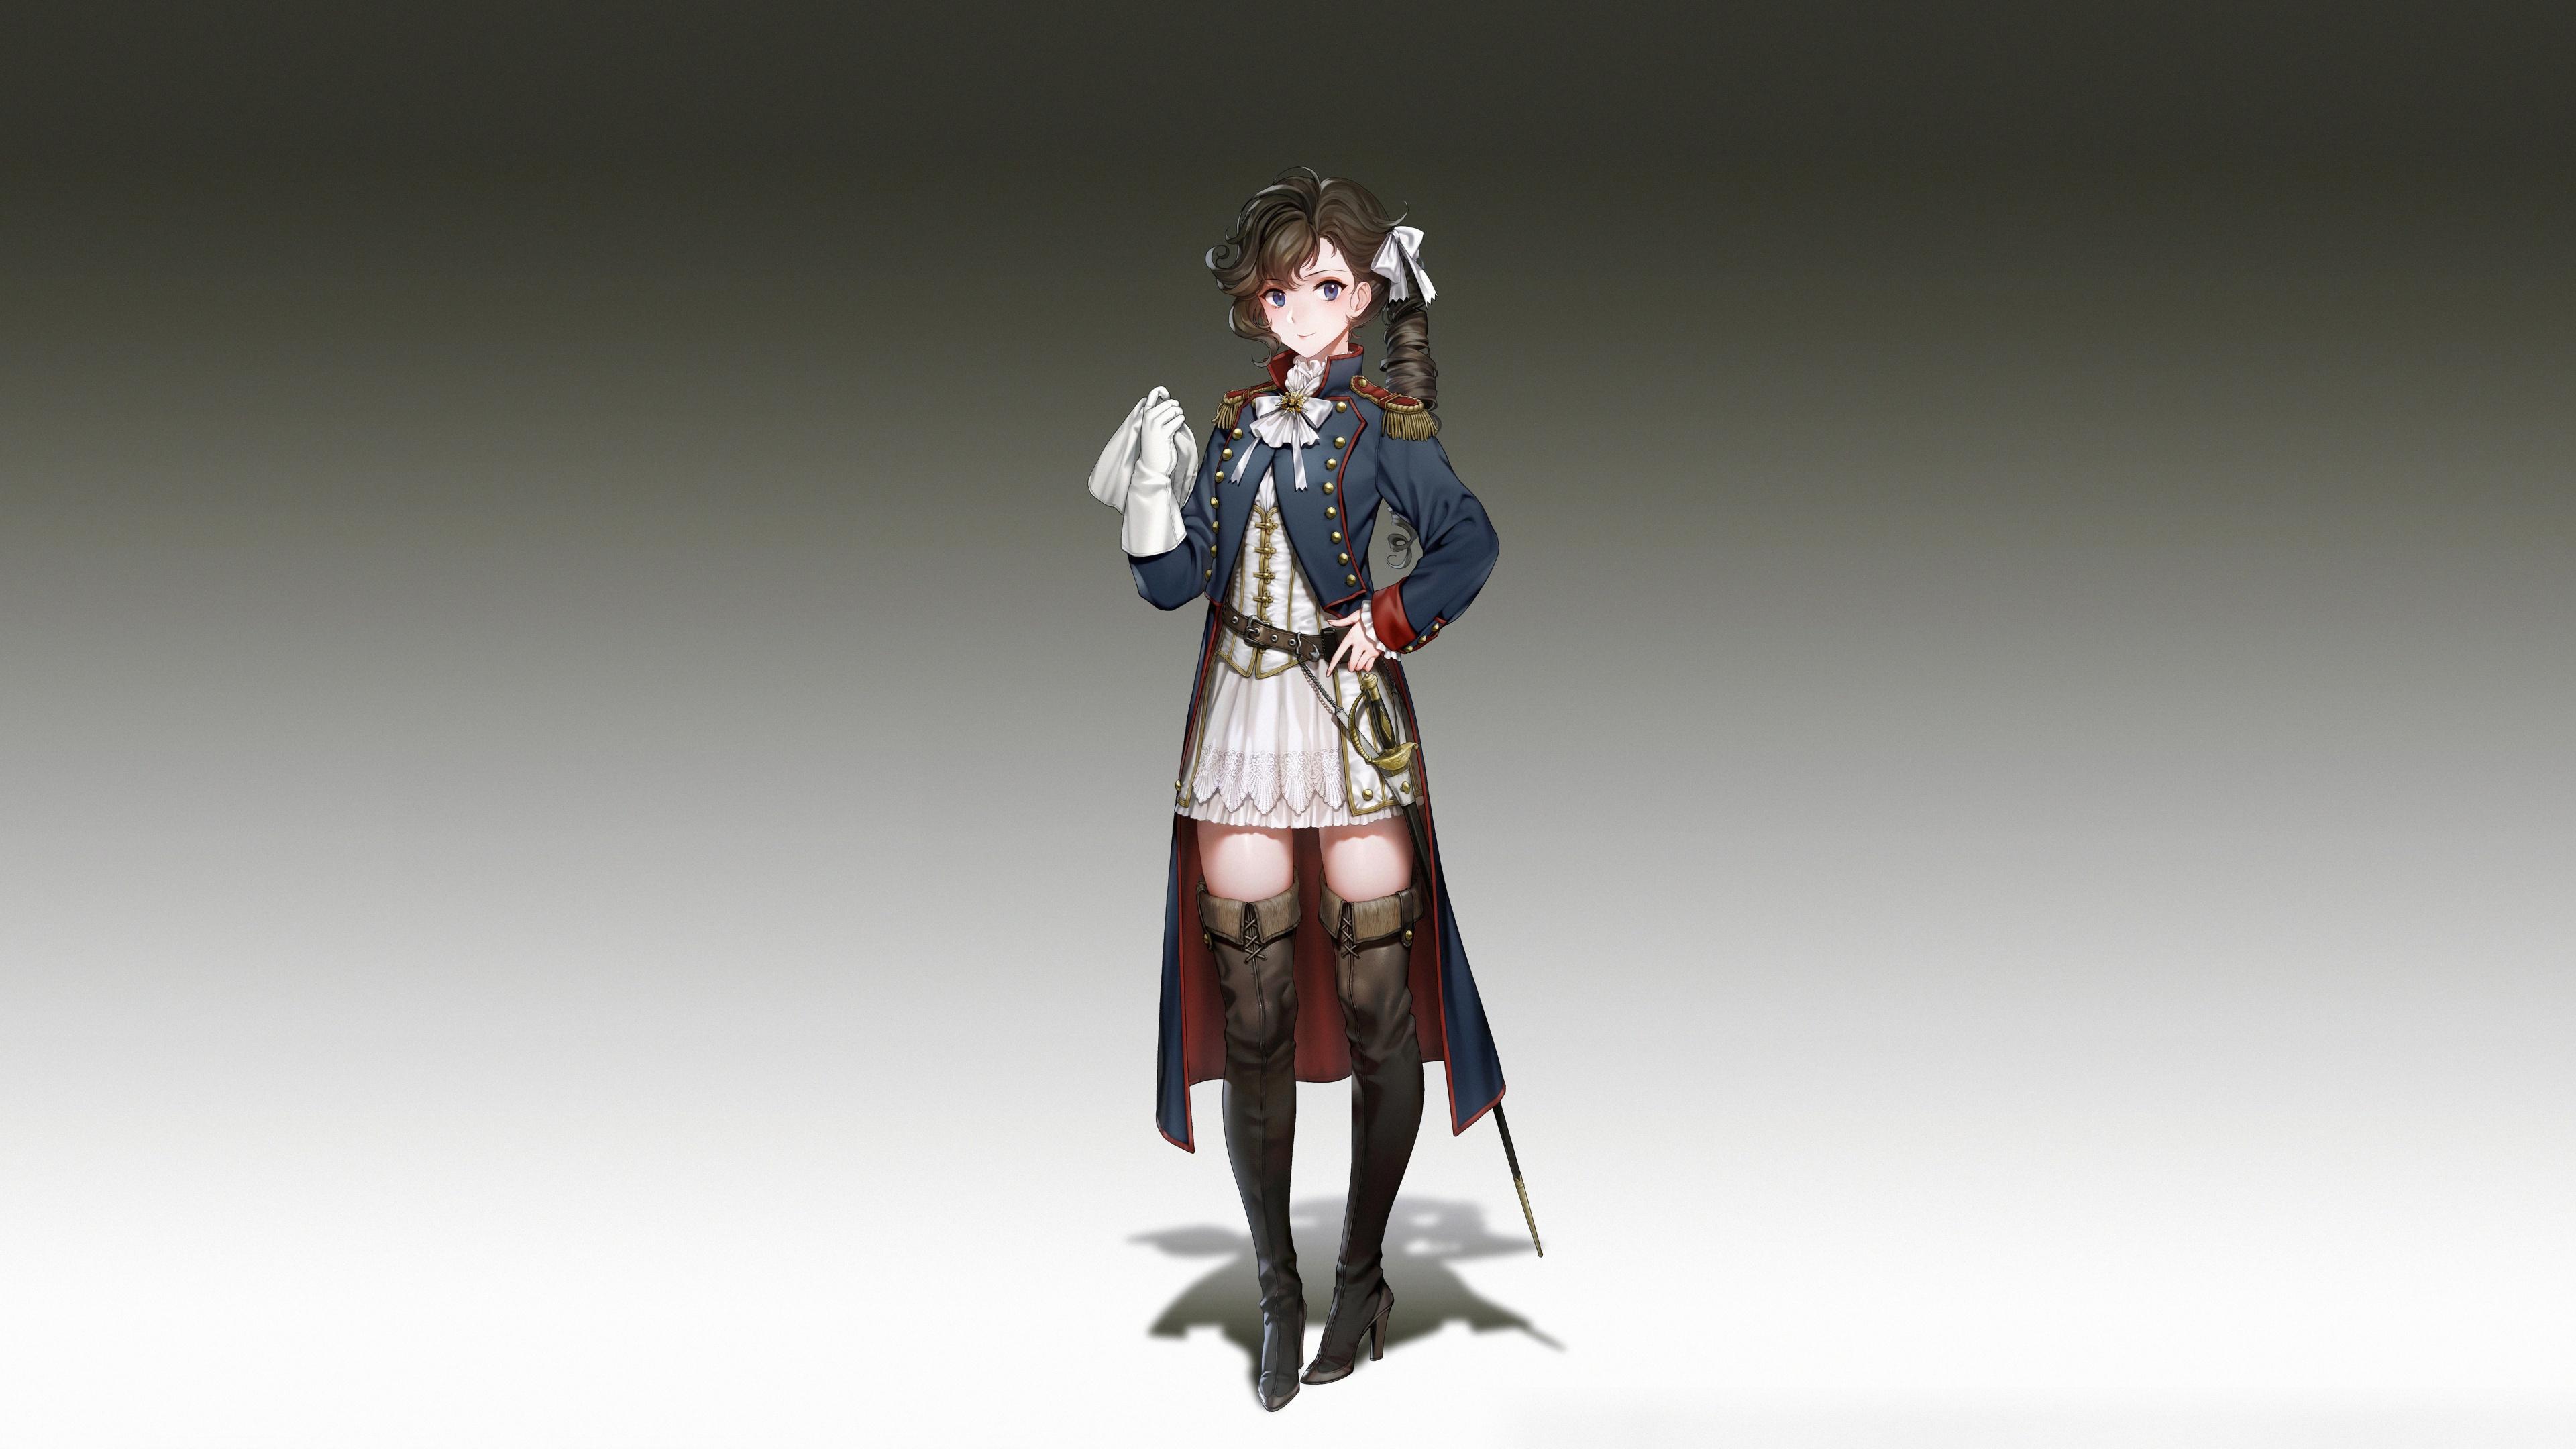 Download 3840x2160 wallpaper military, anime girl, uniform